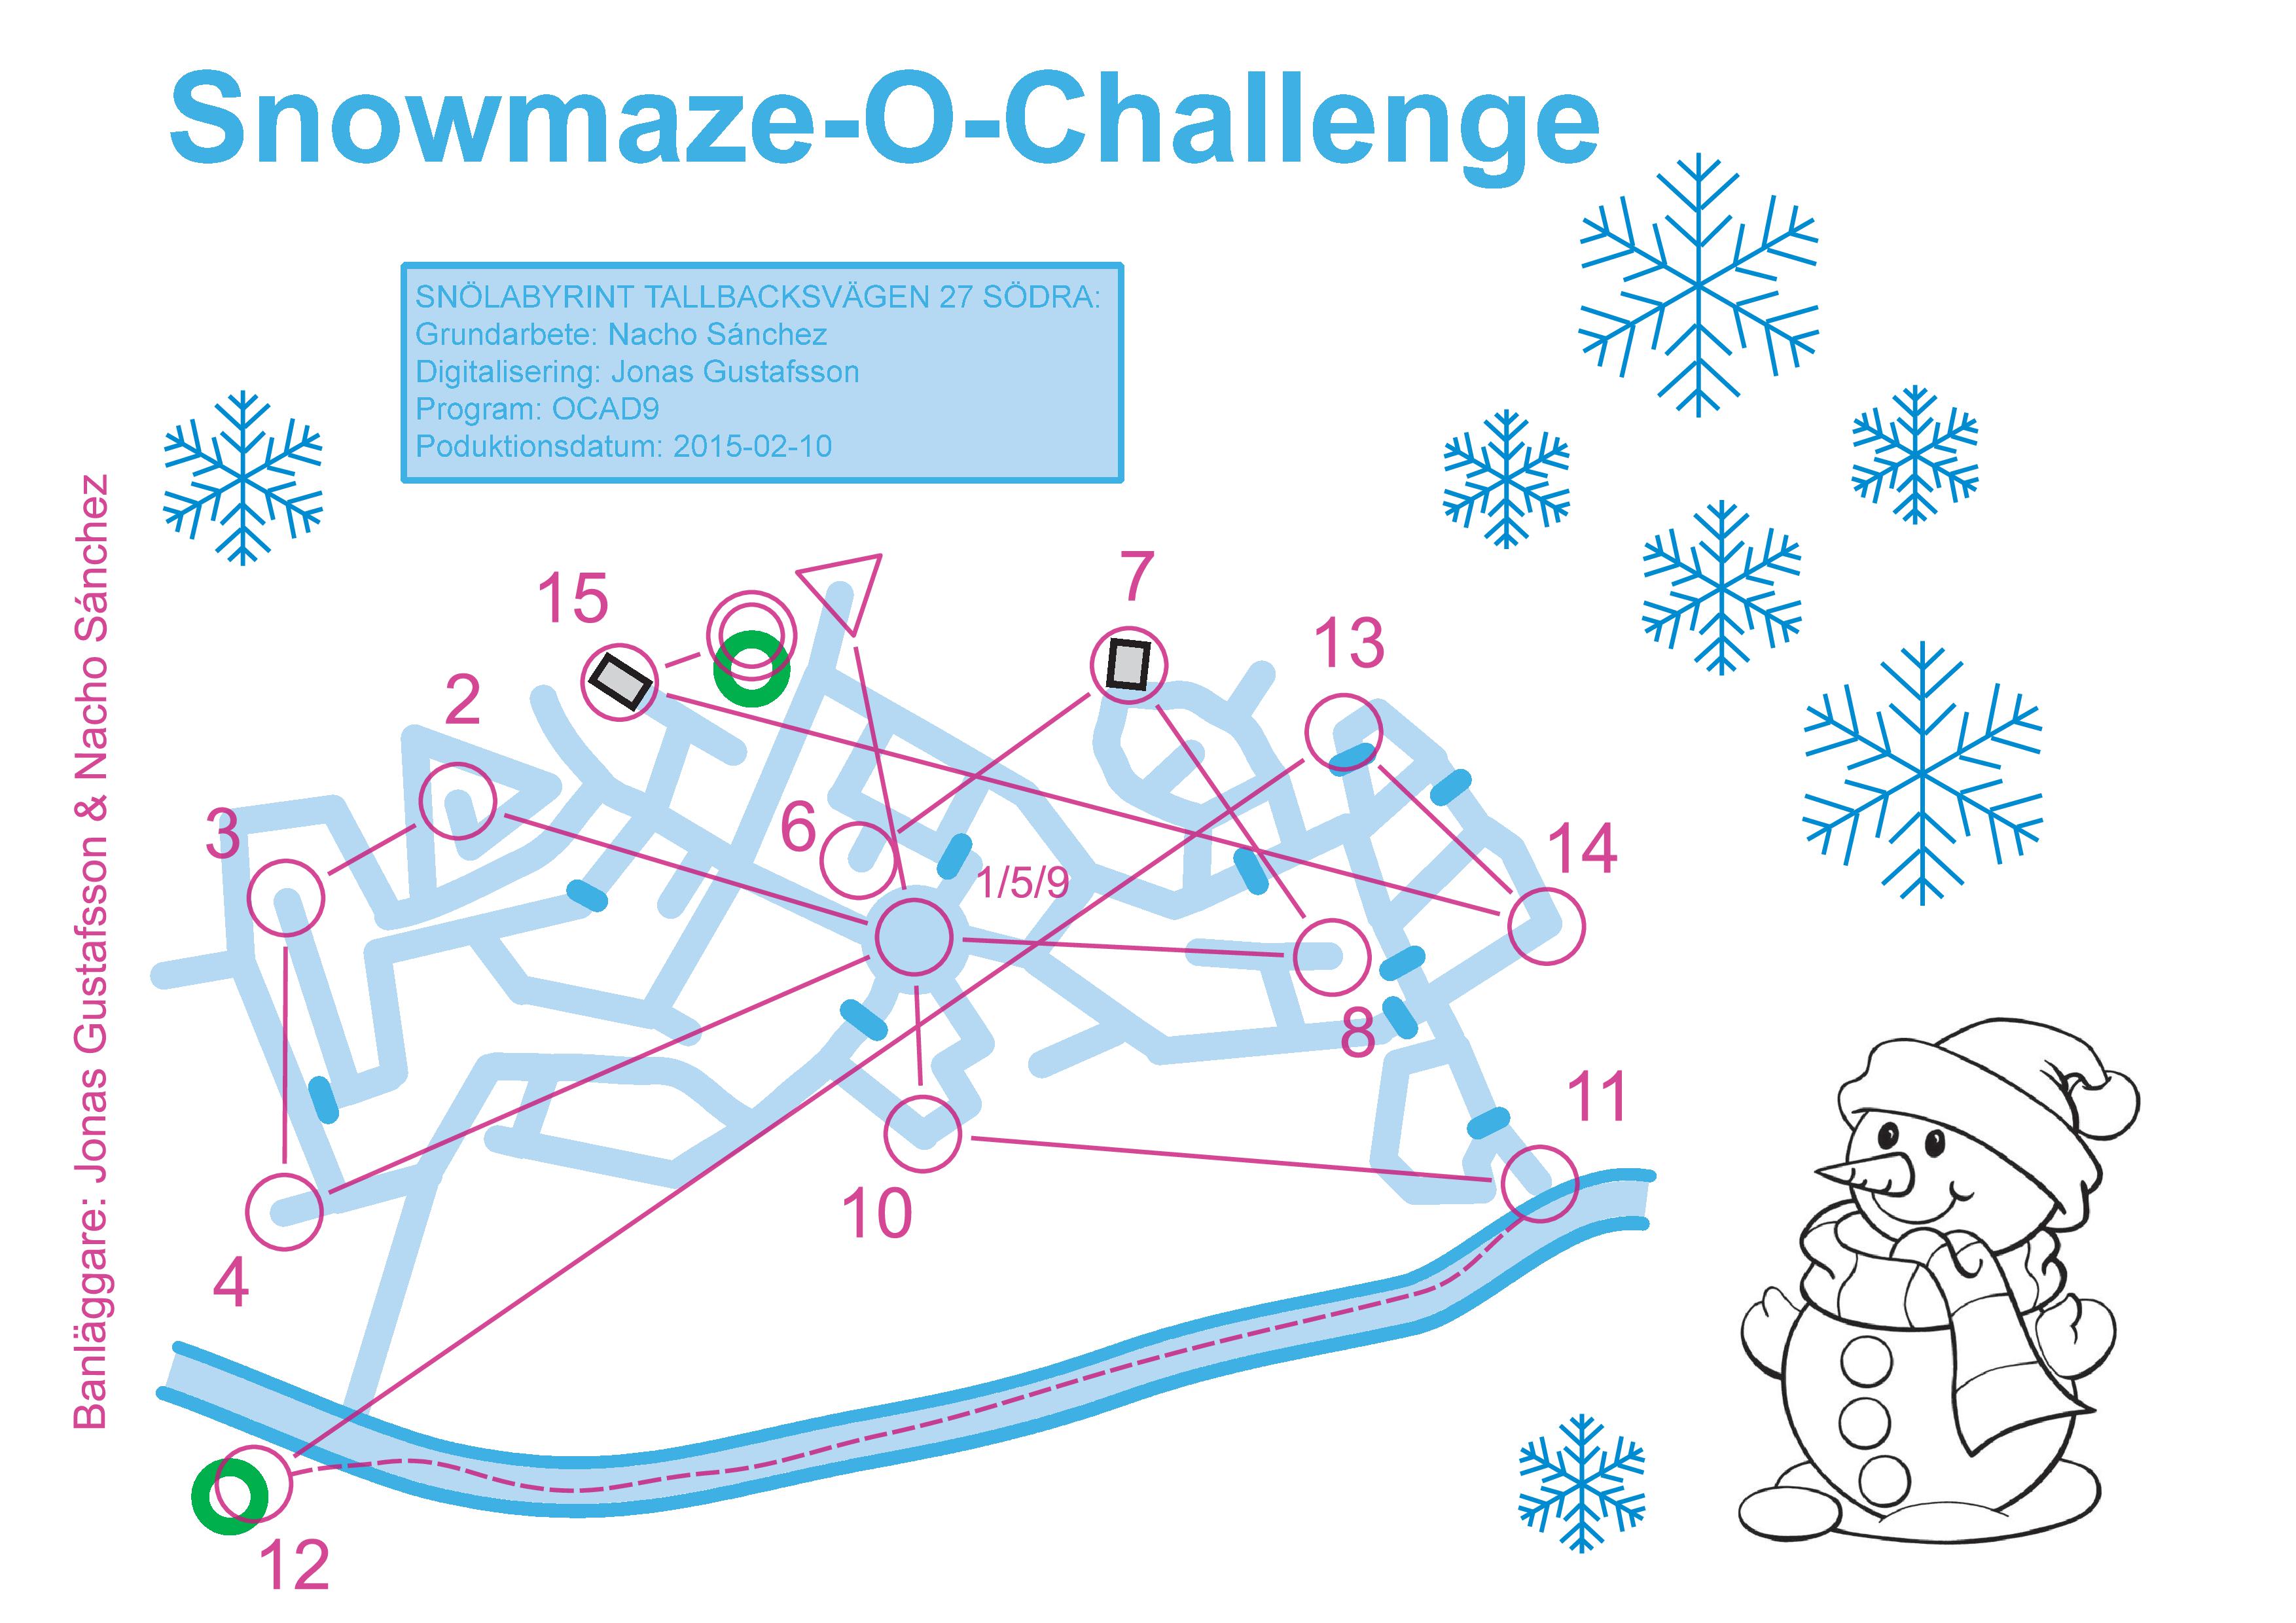 Snowmaze-O-Challenge (11/02/2015)